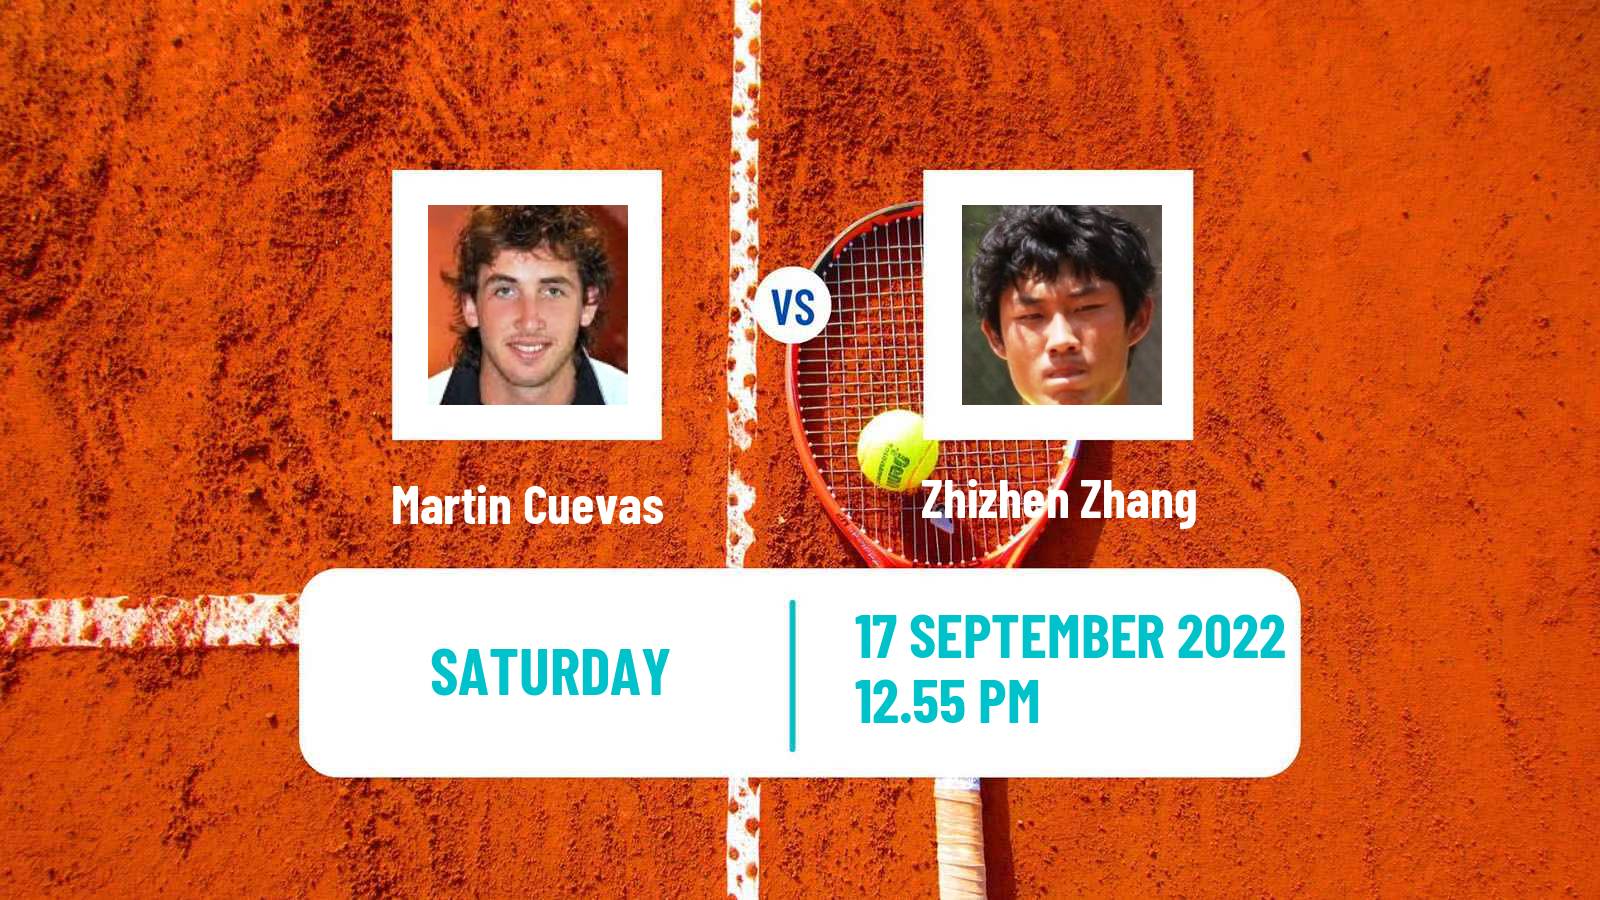 Tennis Davis Cup World Group II Martin Cuevas - Zhizhen Zhang